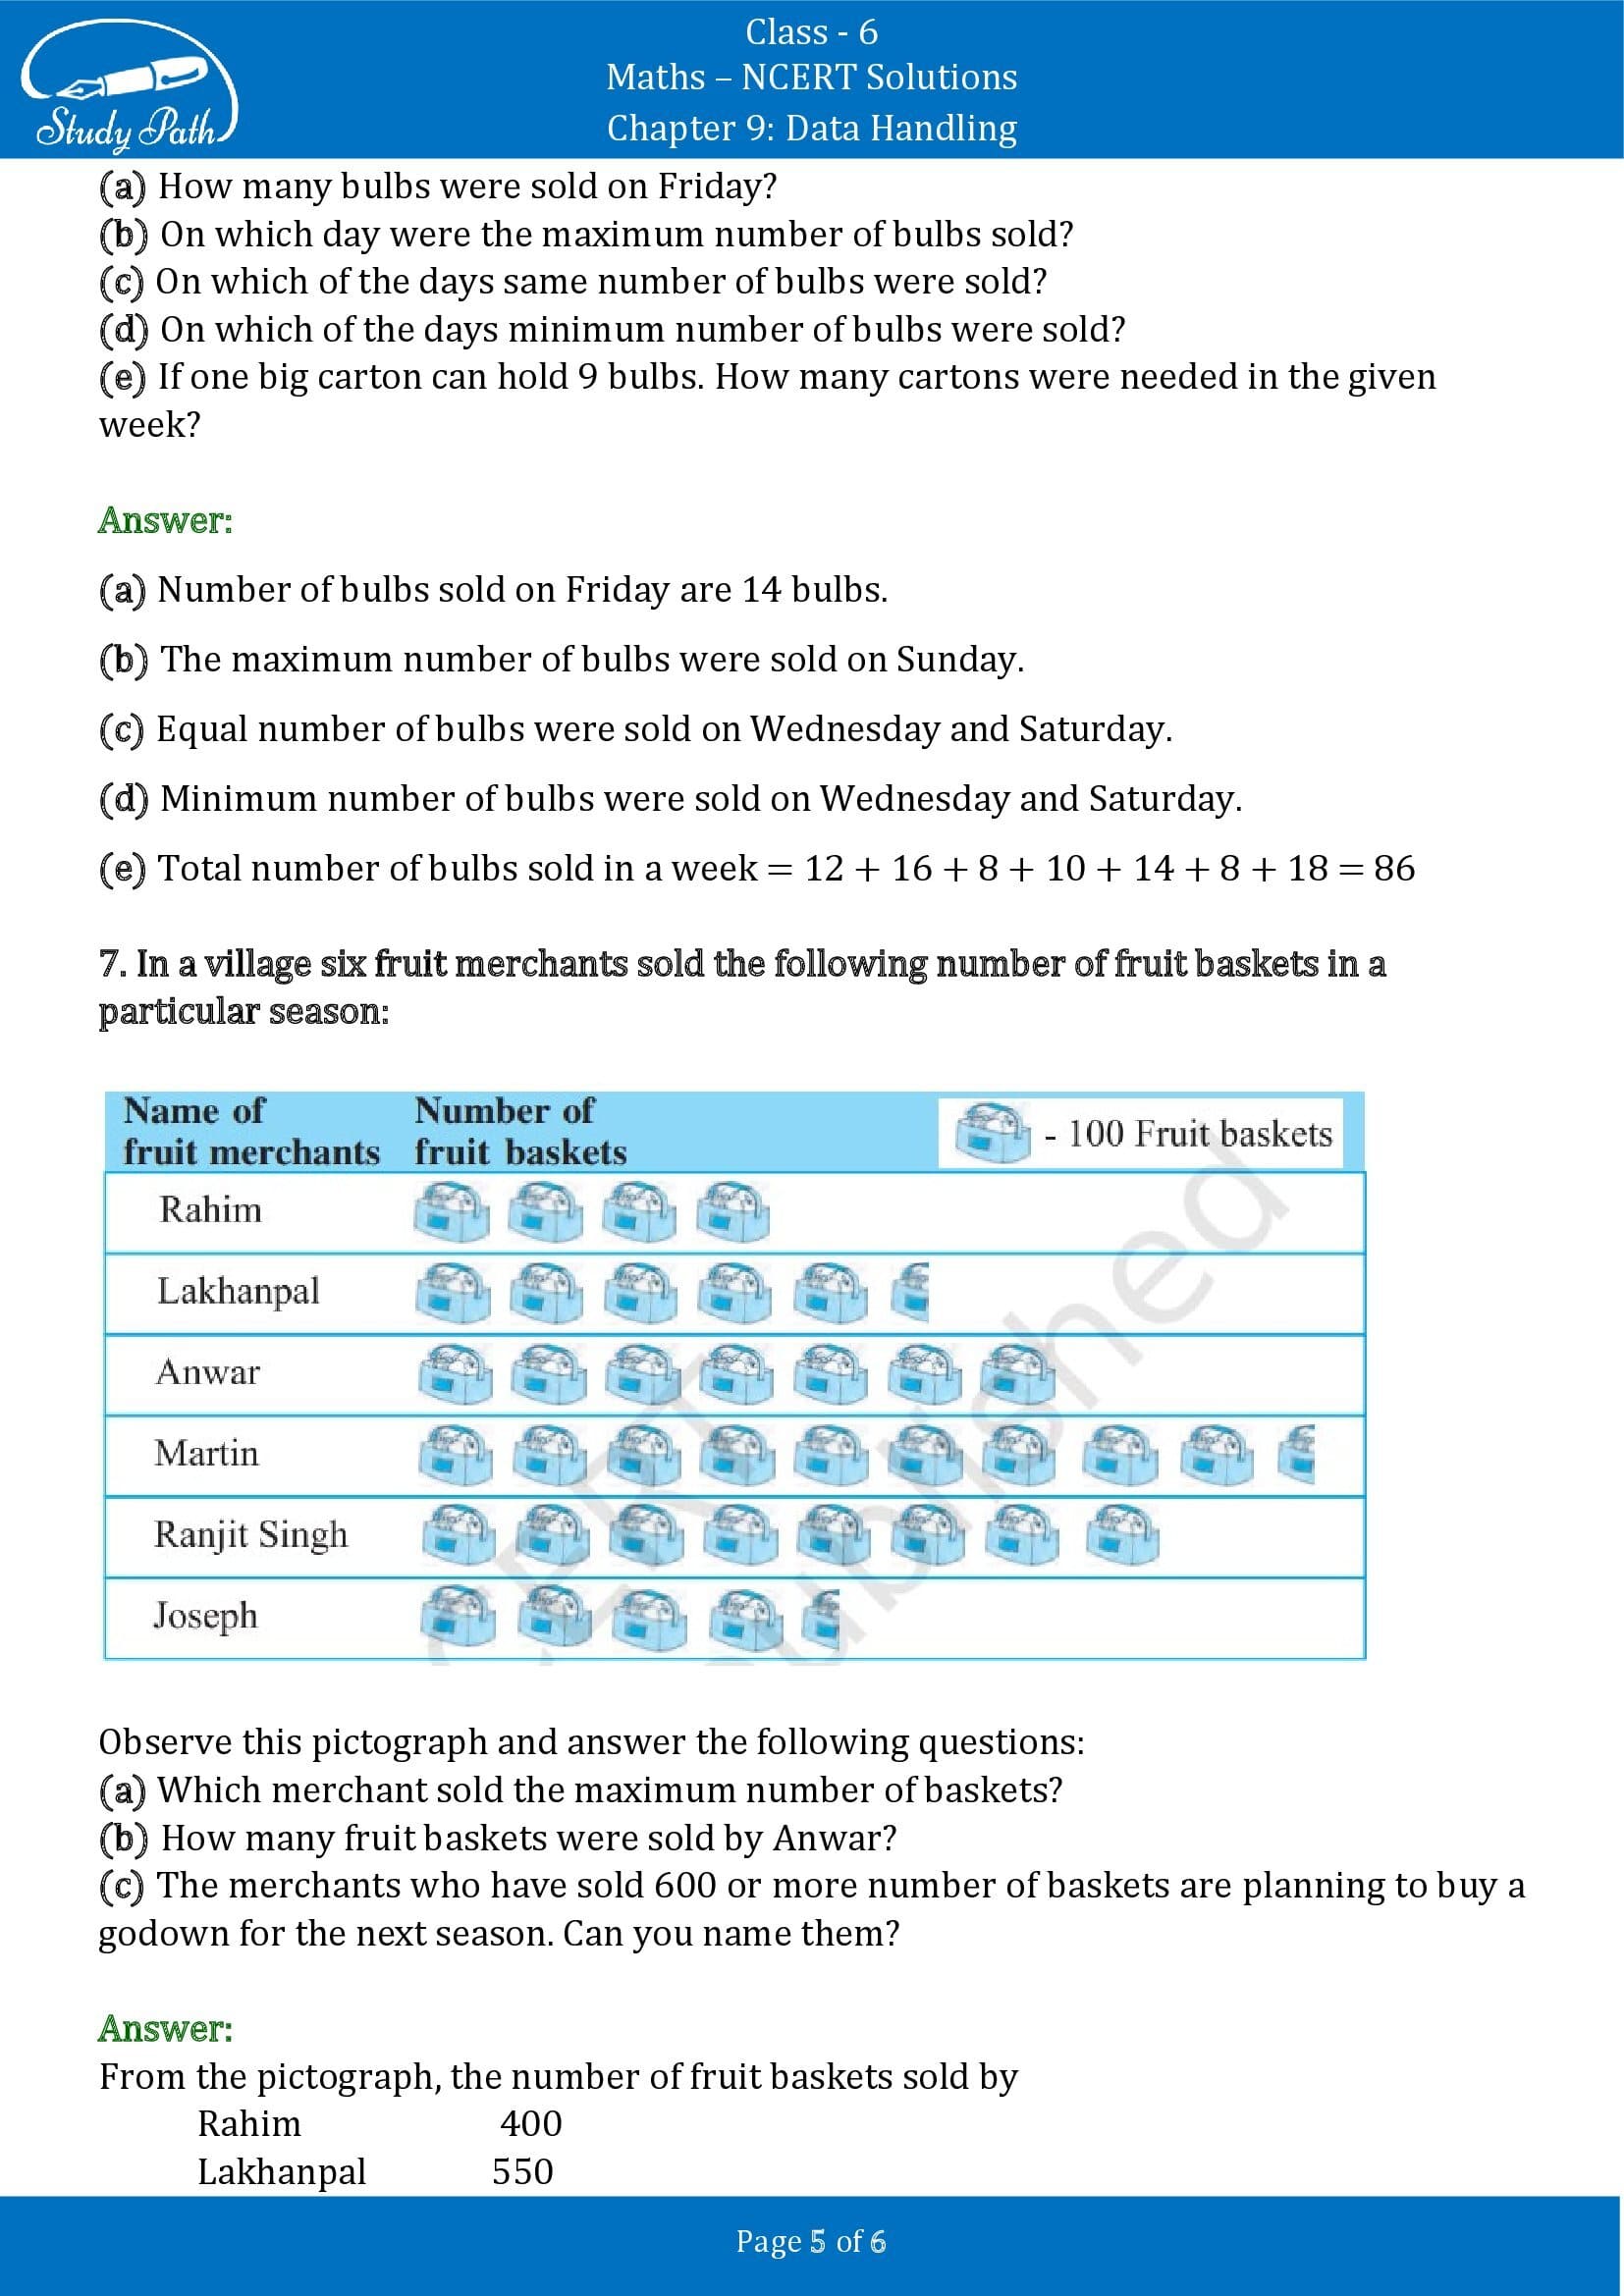 NCERT Solutions for Class 6 Maths Chapter 9 Data Handling Exercise 9.1 00005